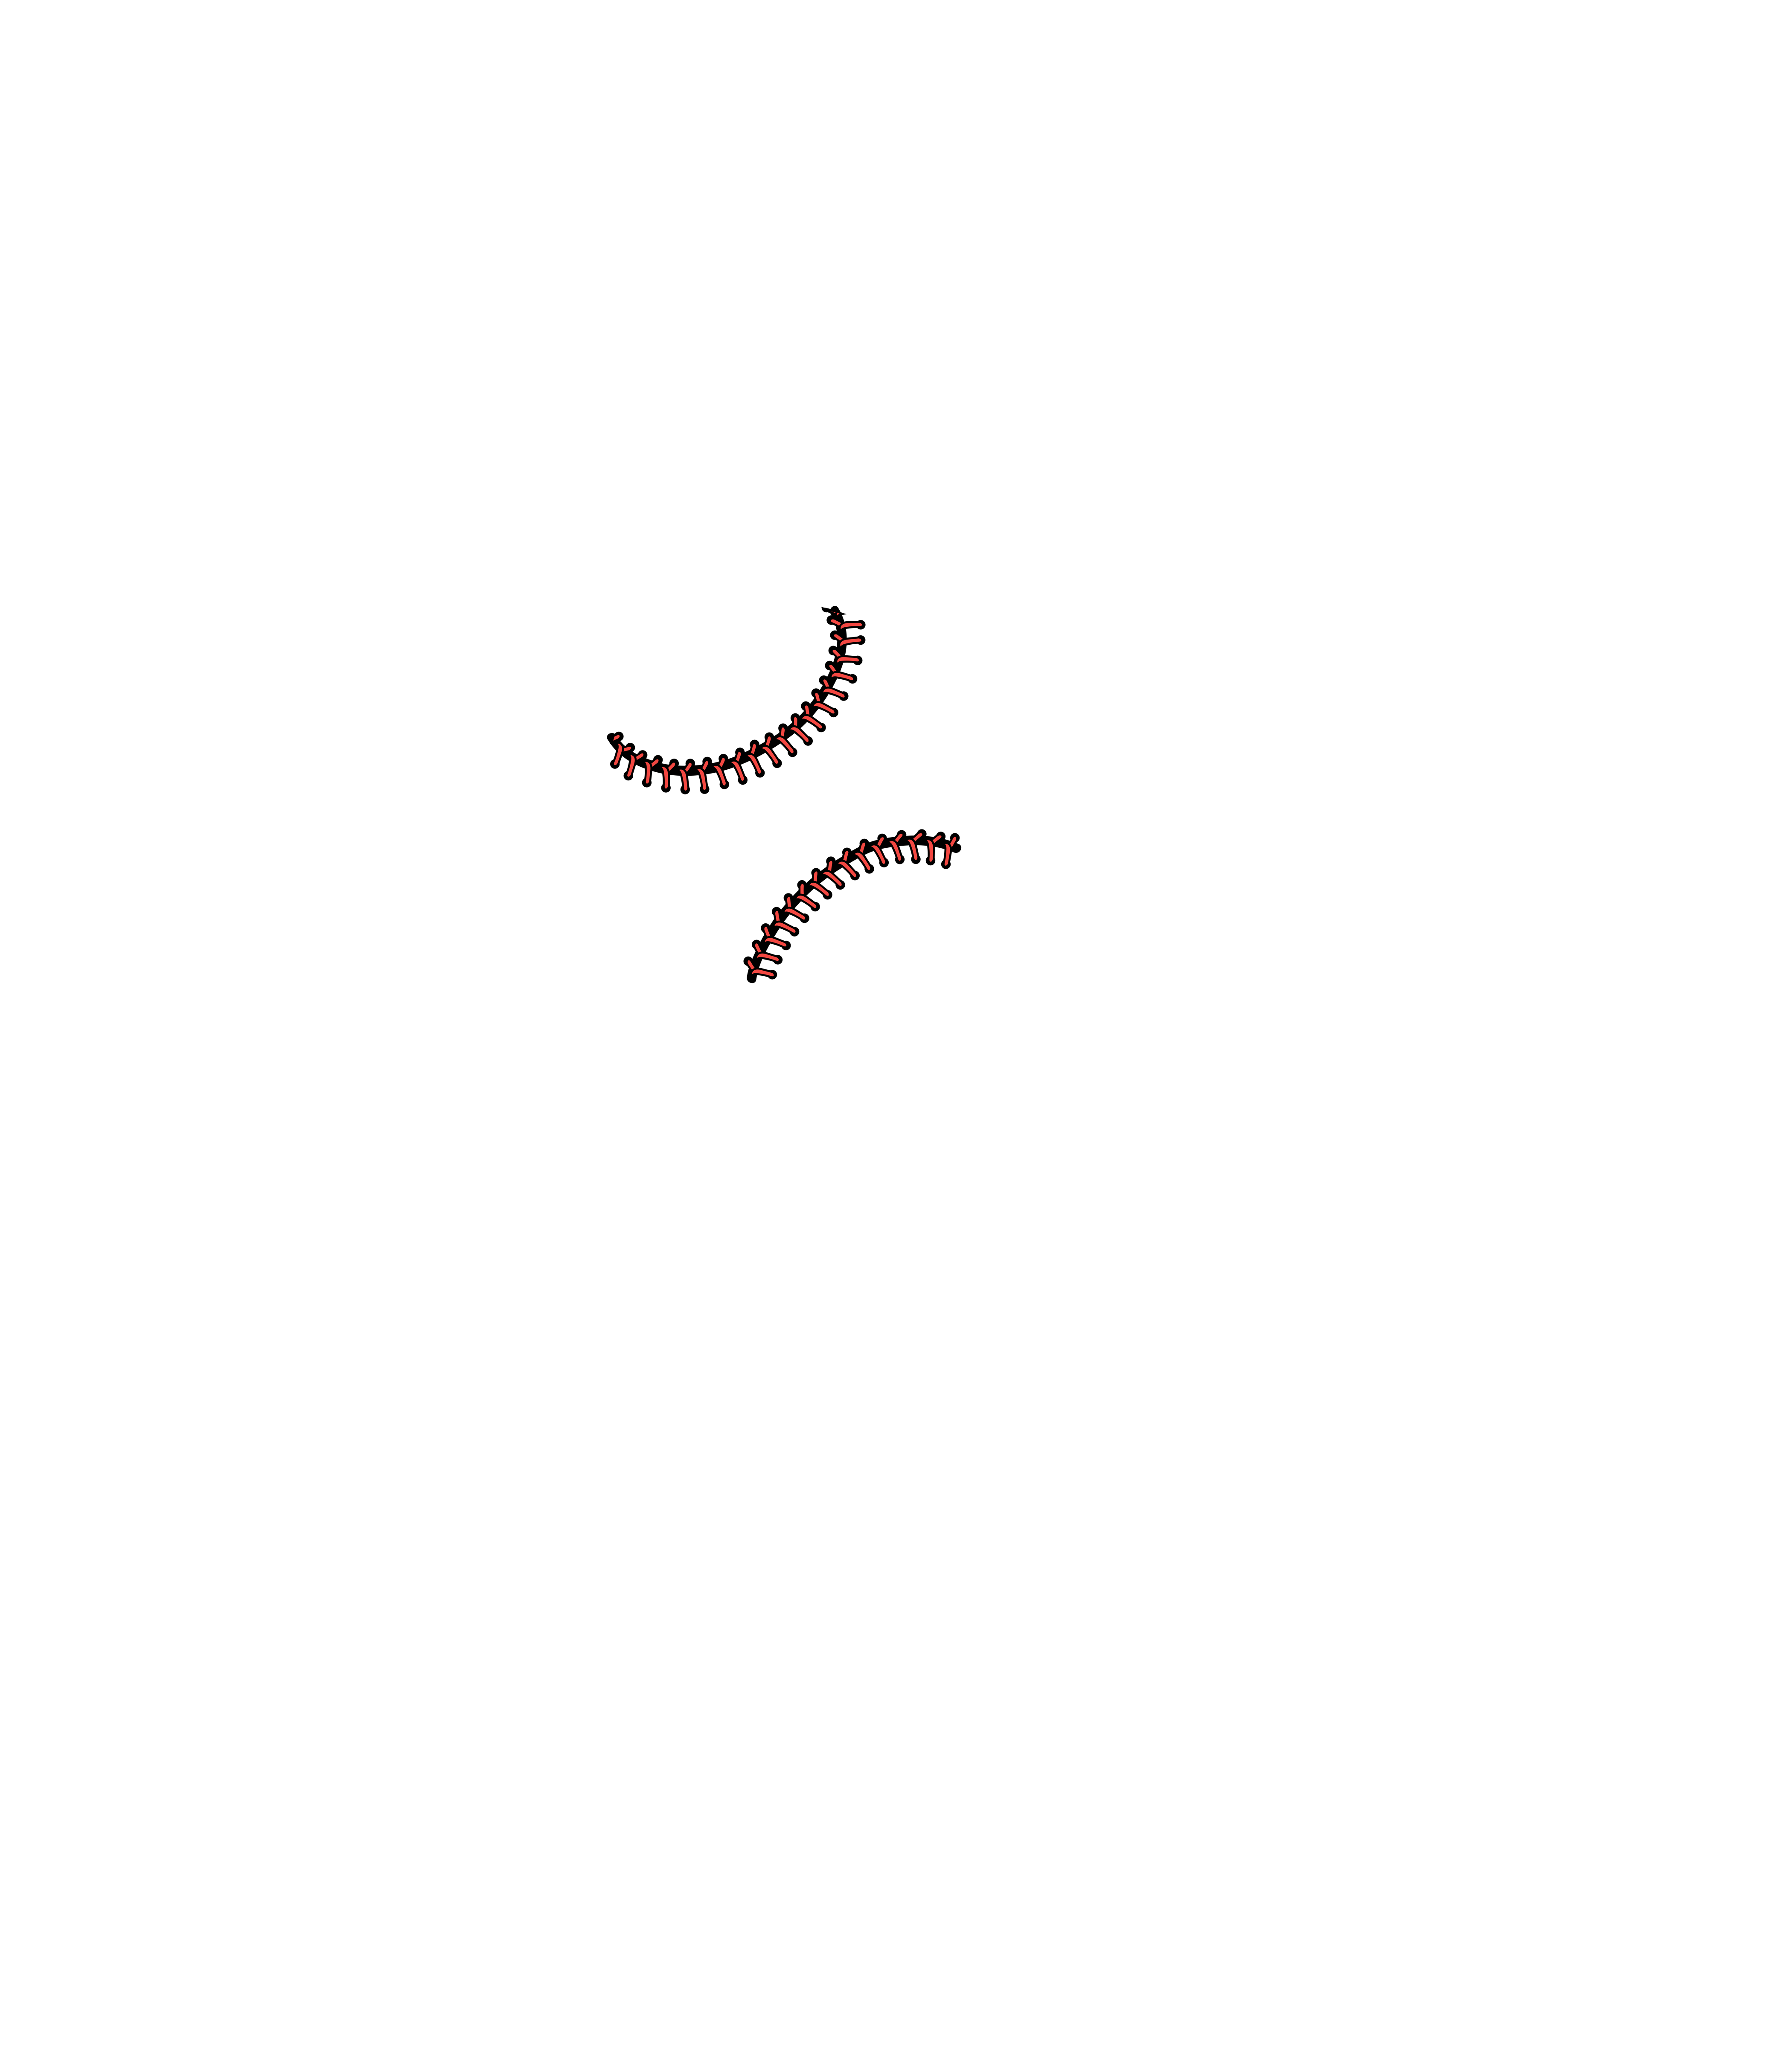 Peckerville Baseball 2020